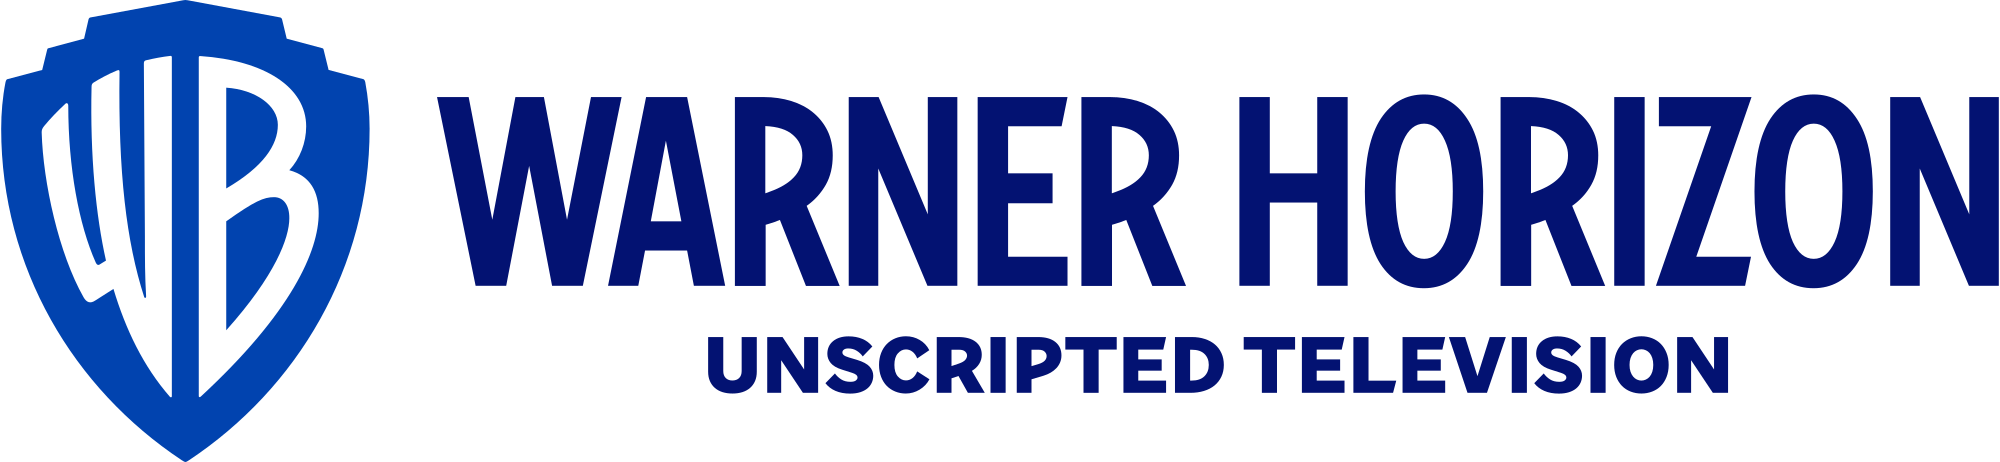 Warner Horizon Unscripted Television Logo